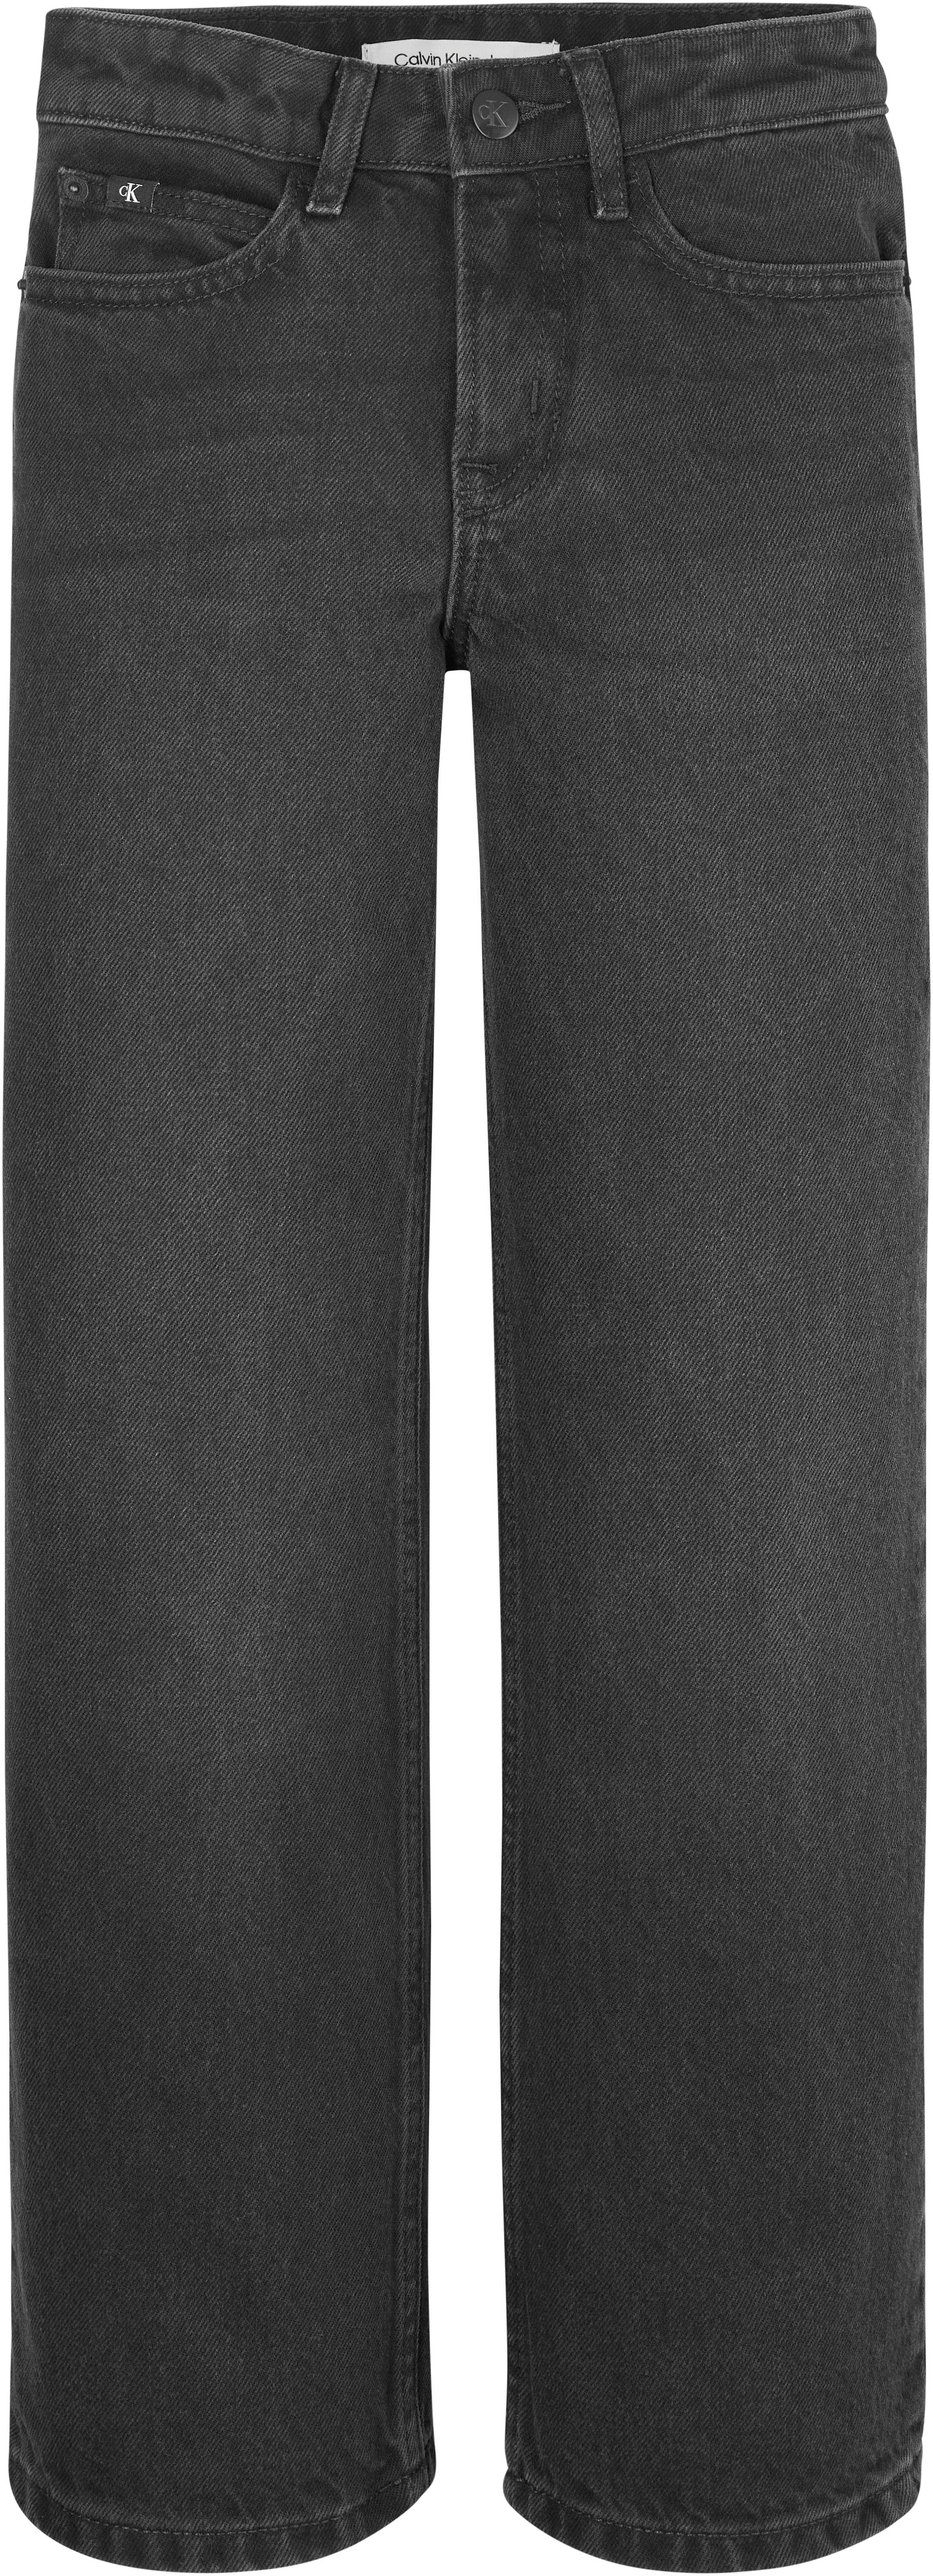 Jeans Stretch-Jeans LEG Calvin WASHED Klein WIDE BLACK